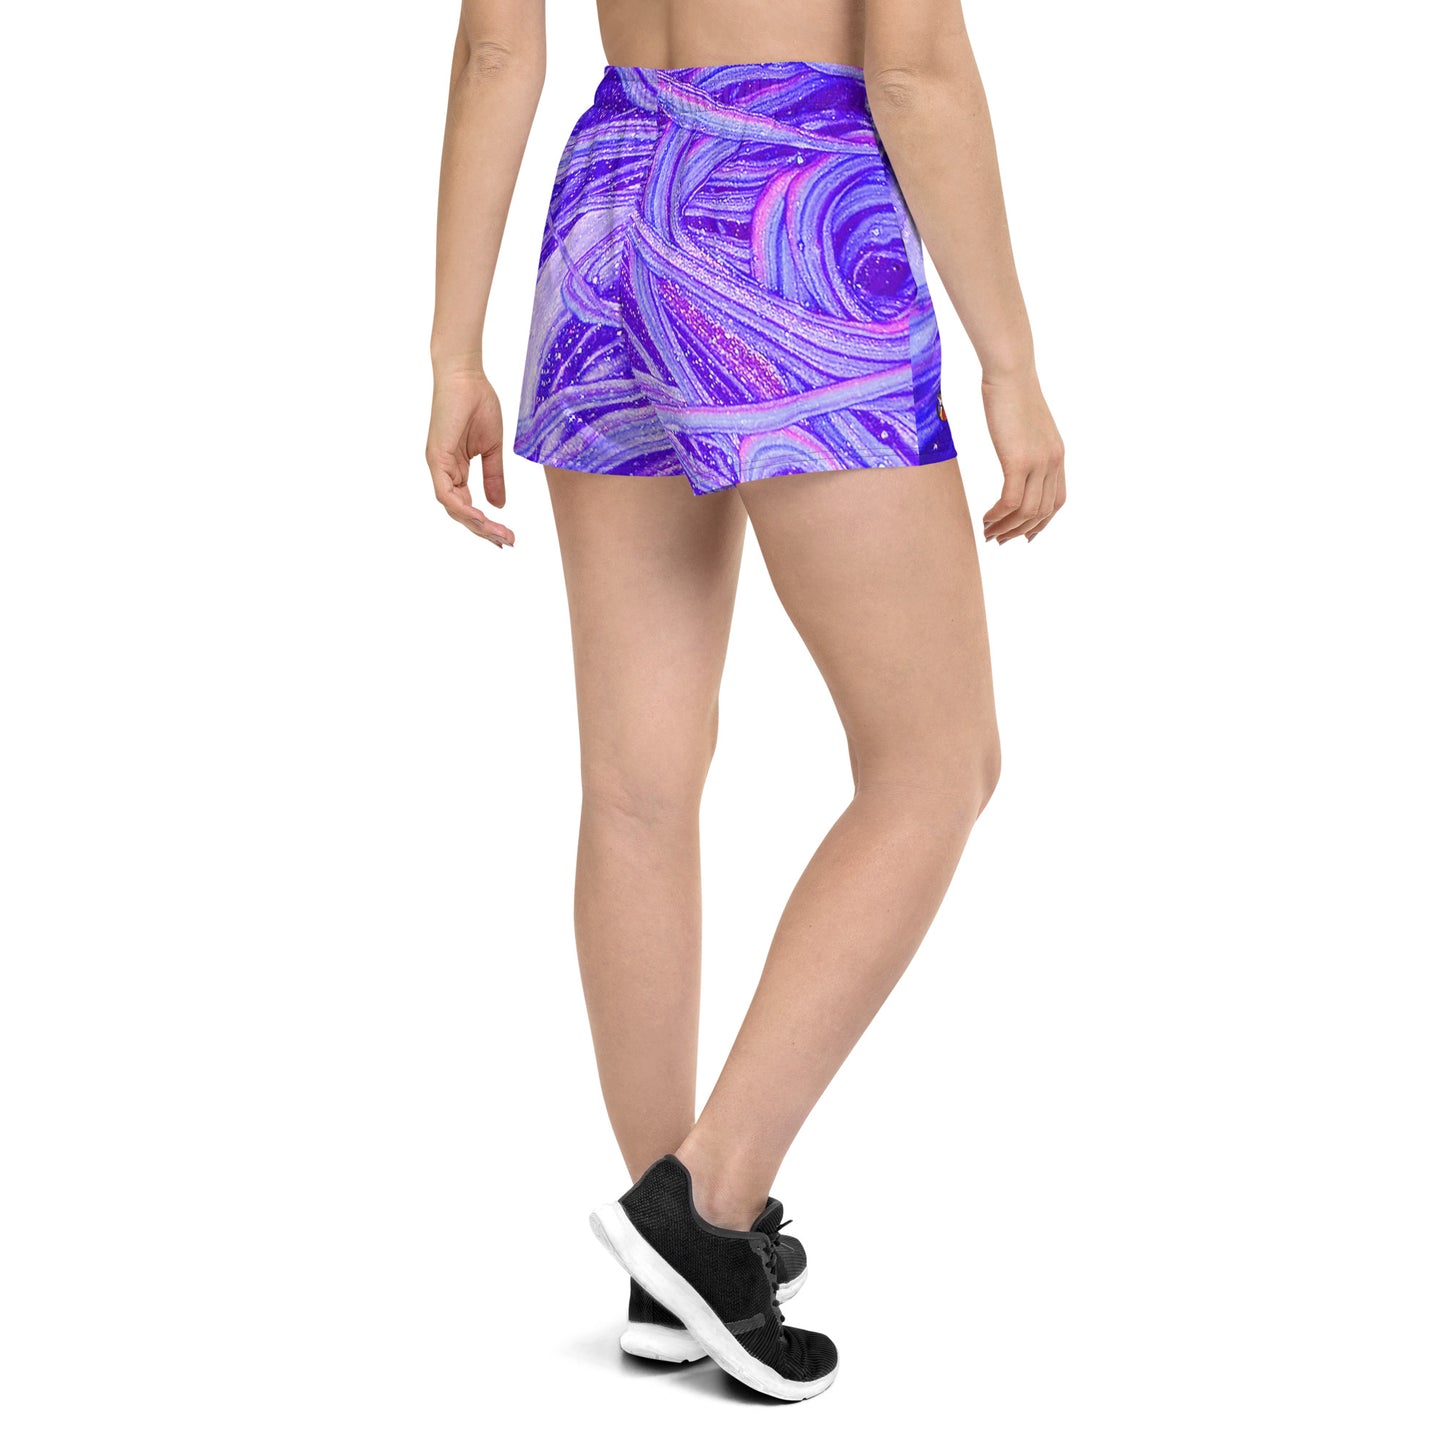 Snooty Fox Art Women’s Athletic Shorts - Romero Design Periwinkle